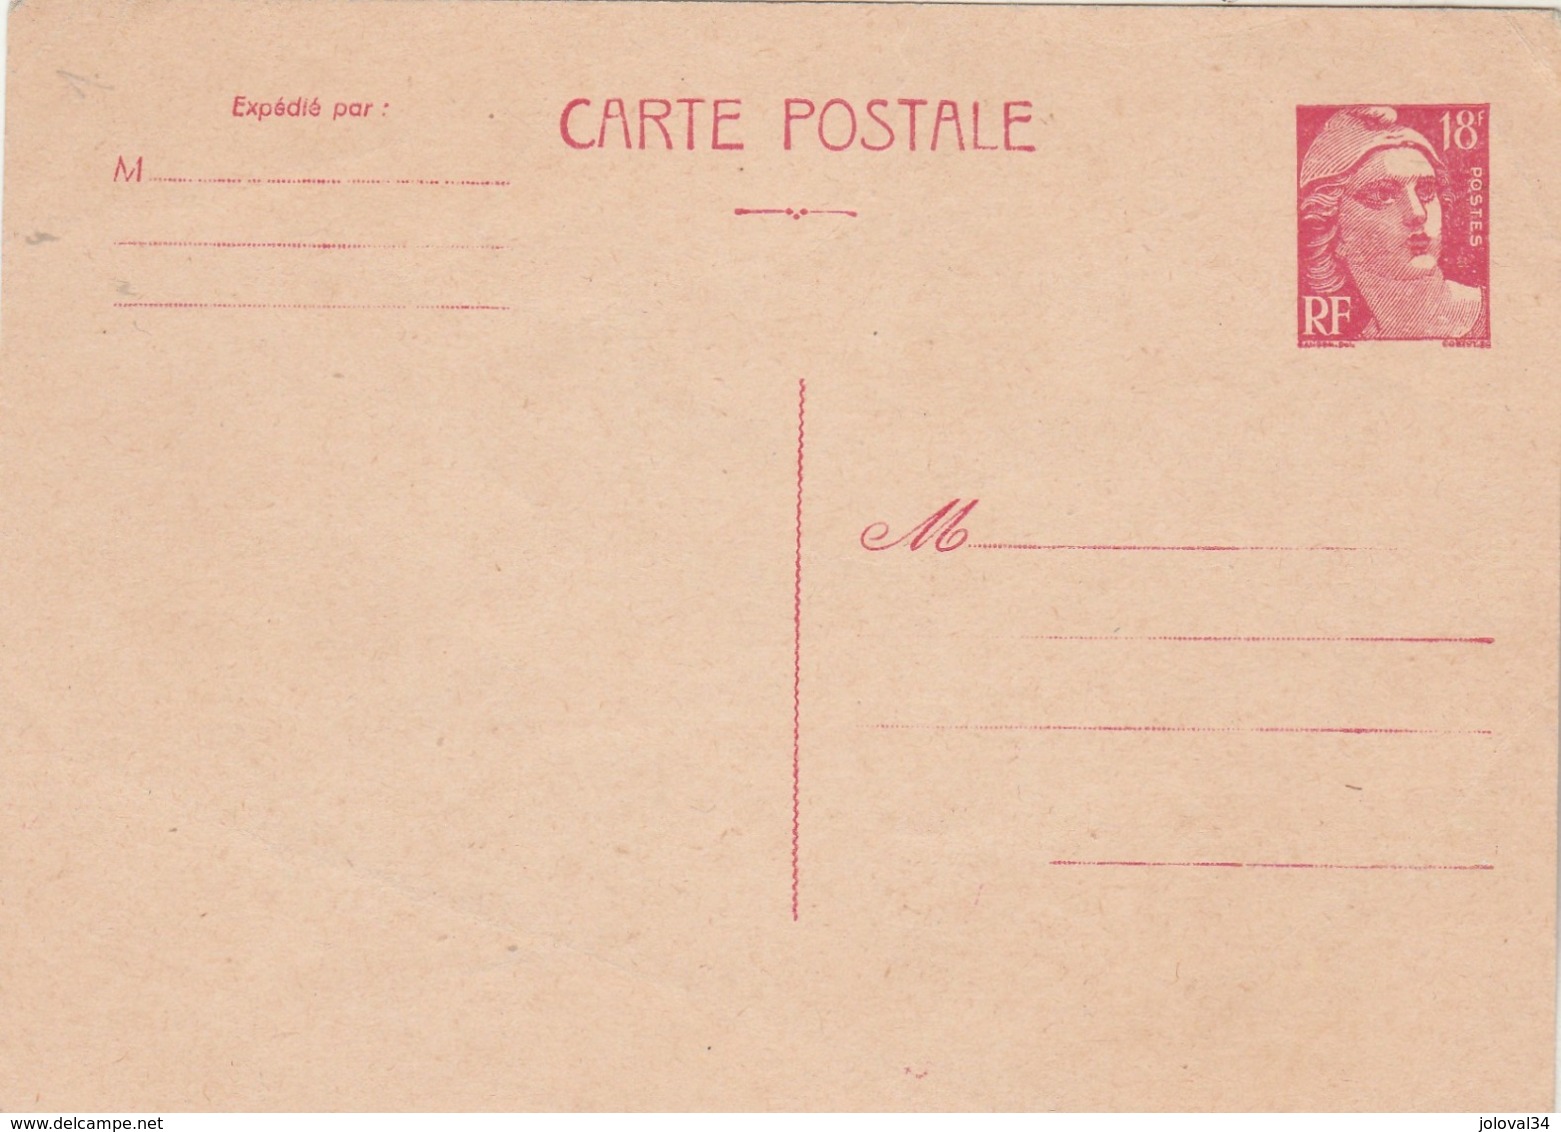 Entier Postal Yvert 887 CP1 Gandon - Neuf - Cote 200 Euros - Cartes Postales Types Et TSC (avant 1995)